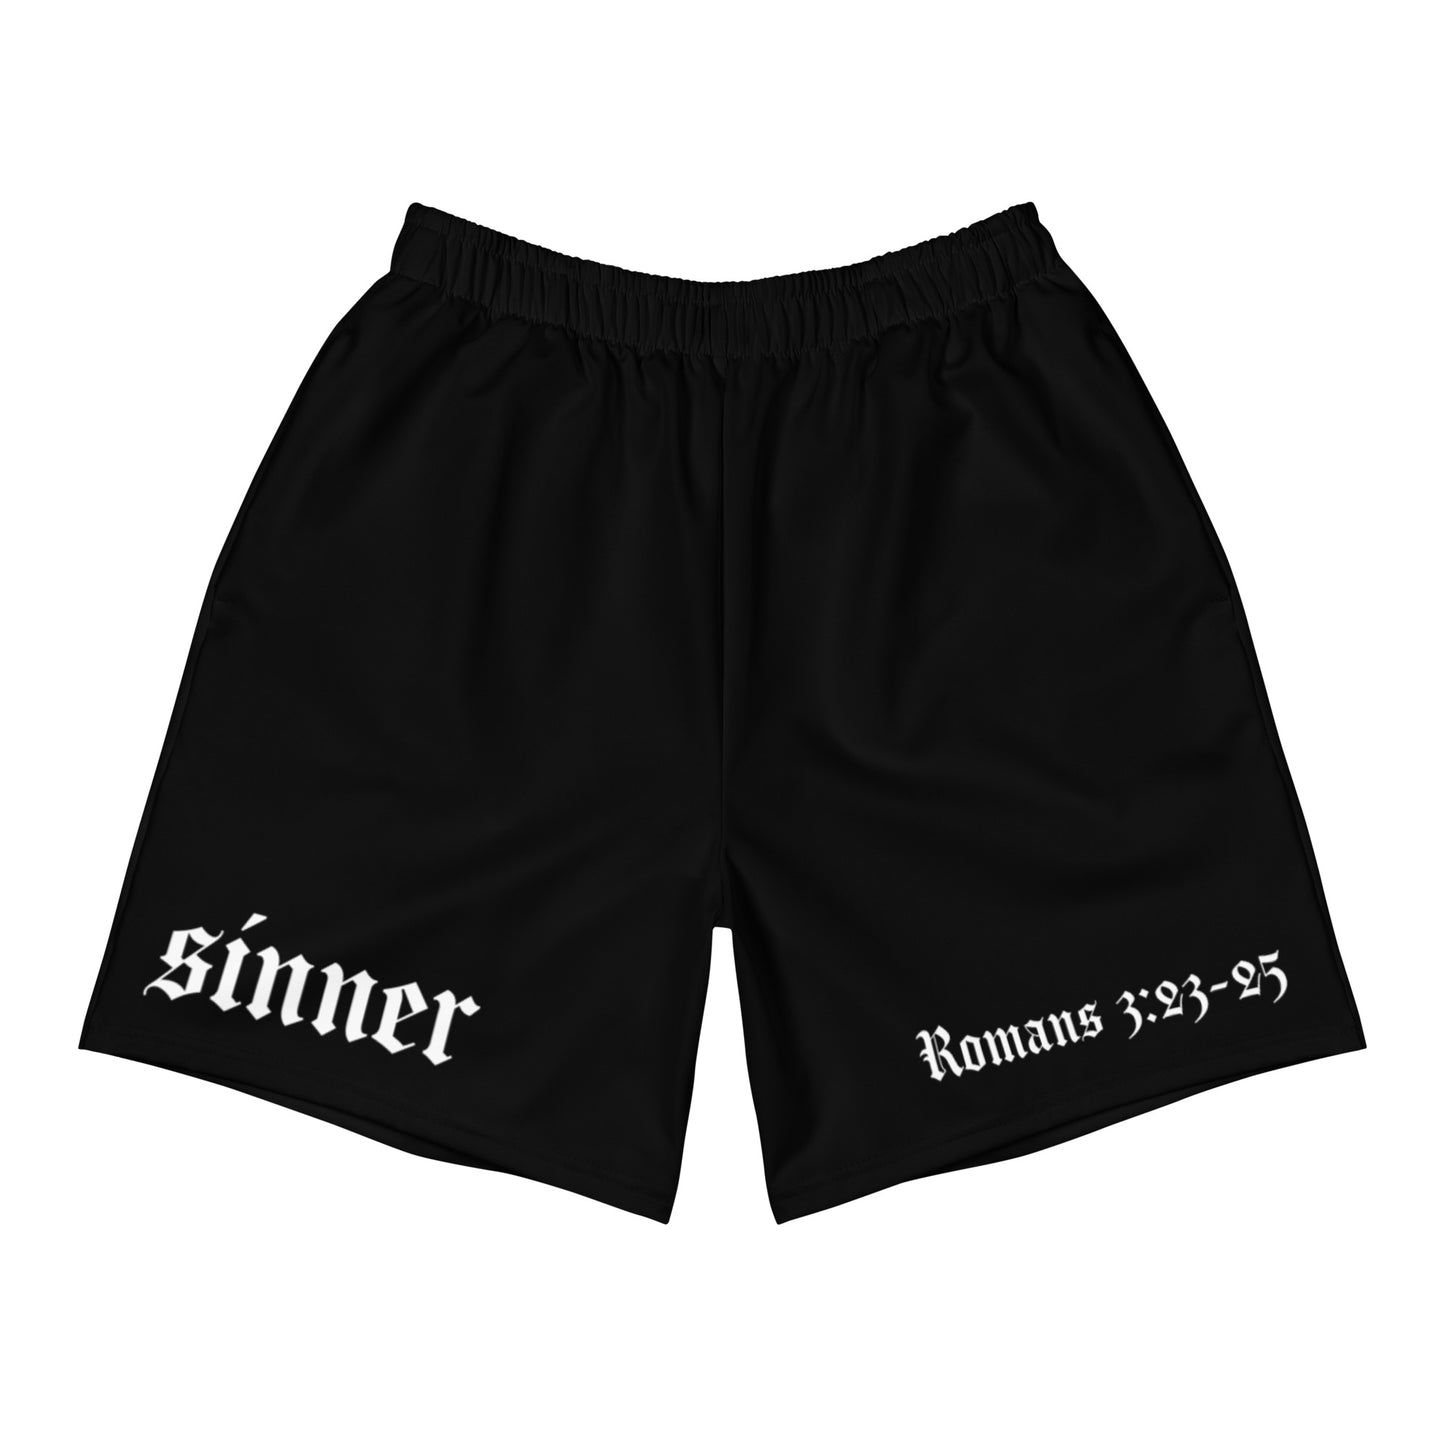 Sinner Athletic Shorts